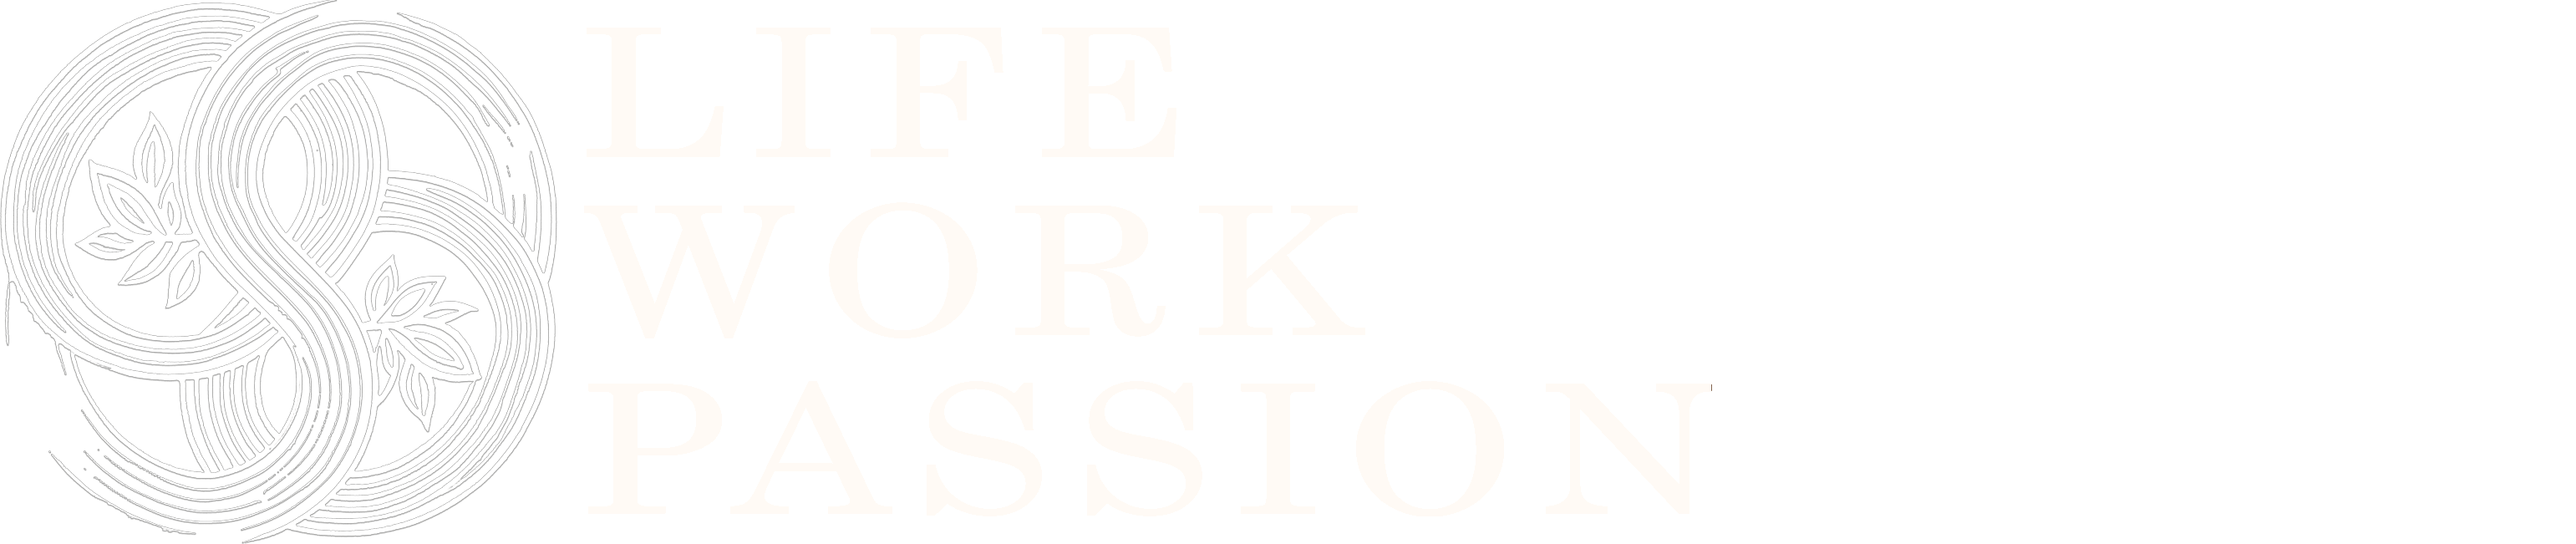 LifeWorkPassion.com Logo in white